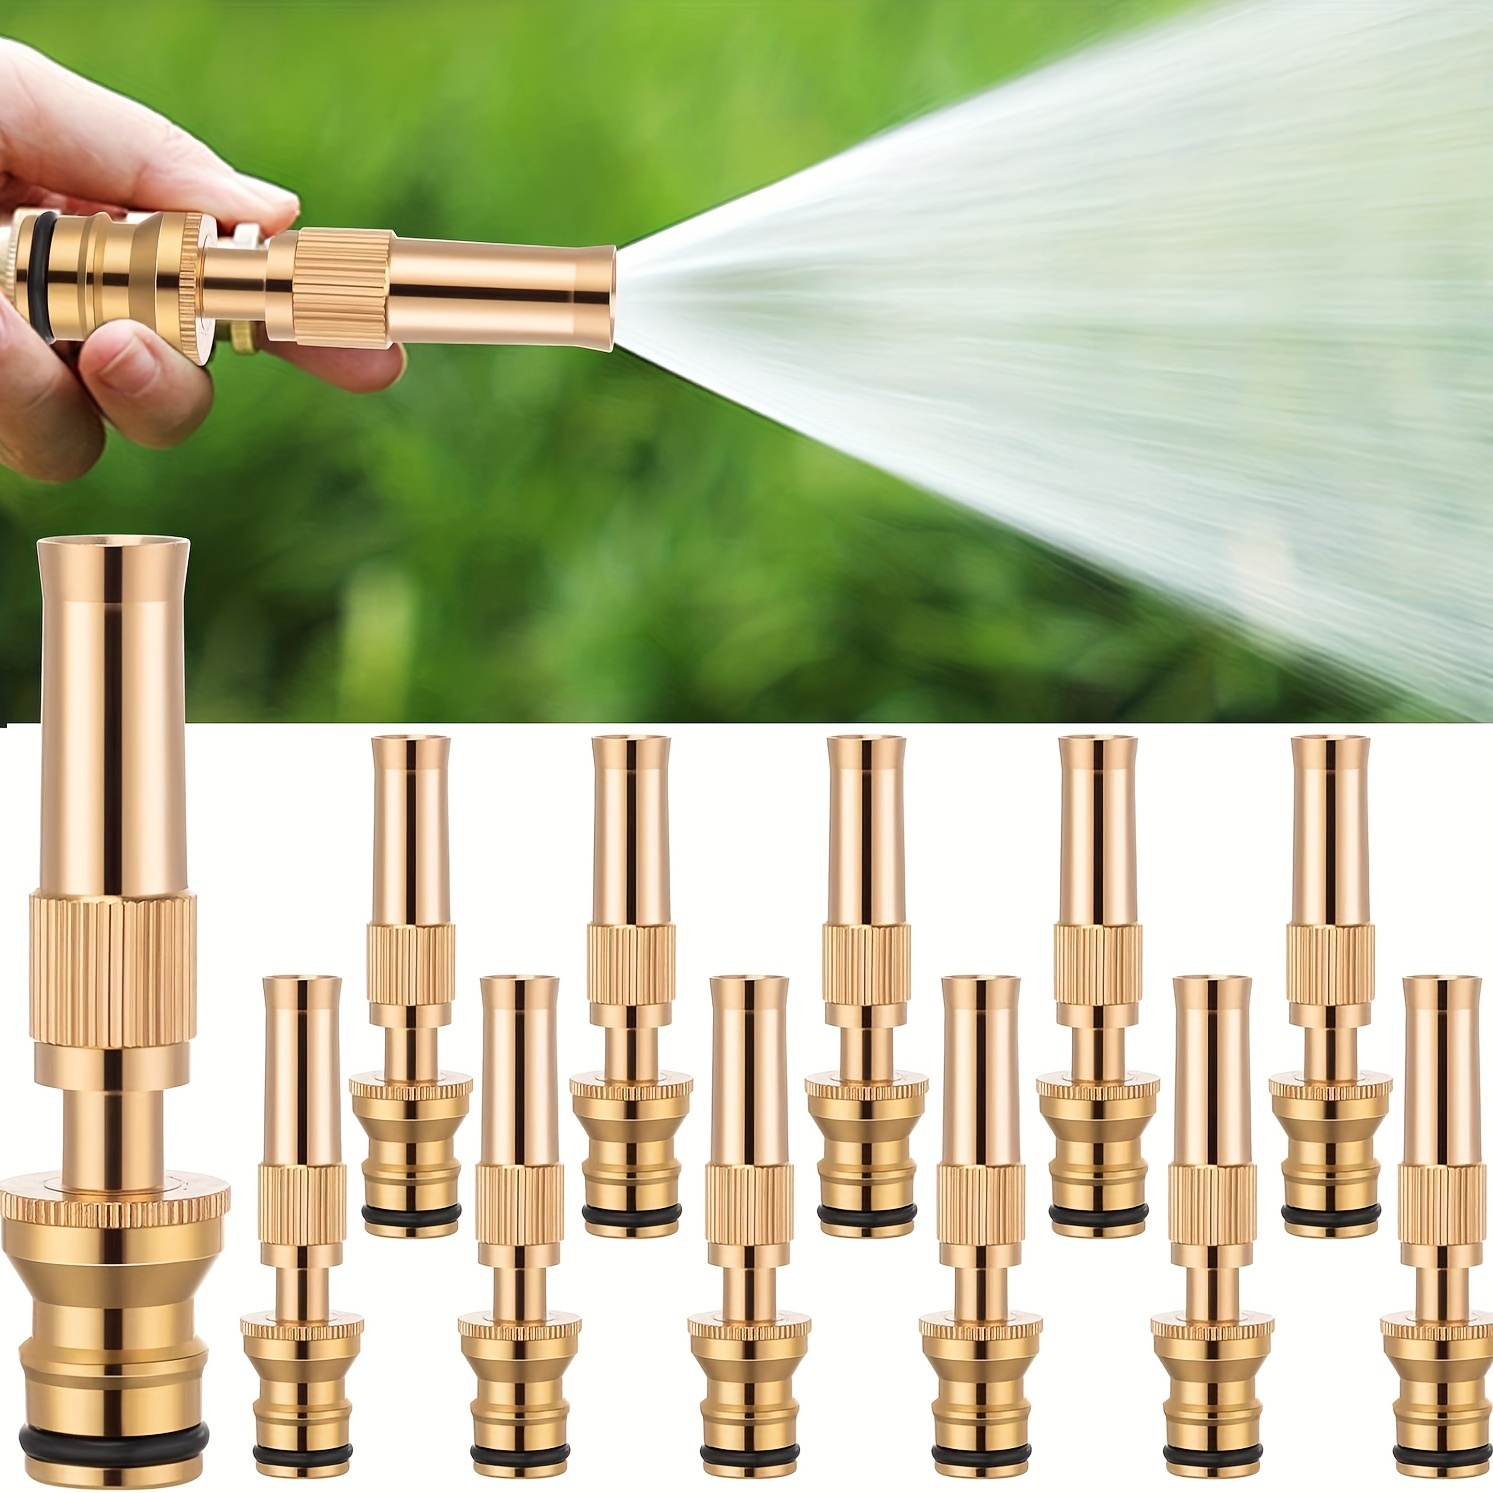 High Pressure Hose Nozzle Heavy Duty | Brass Water Hose Nozzles for Garden  Hoses | Adjustable Function | Fits Standard Hoses, Garden Sprayer, Spray